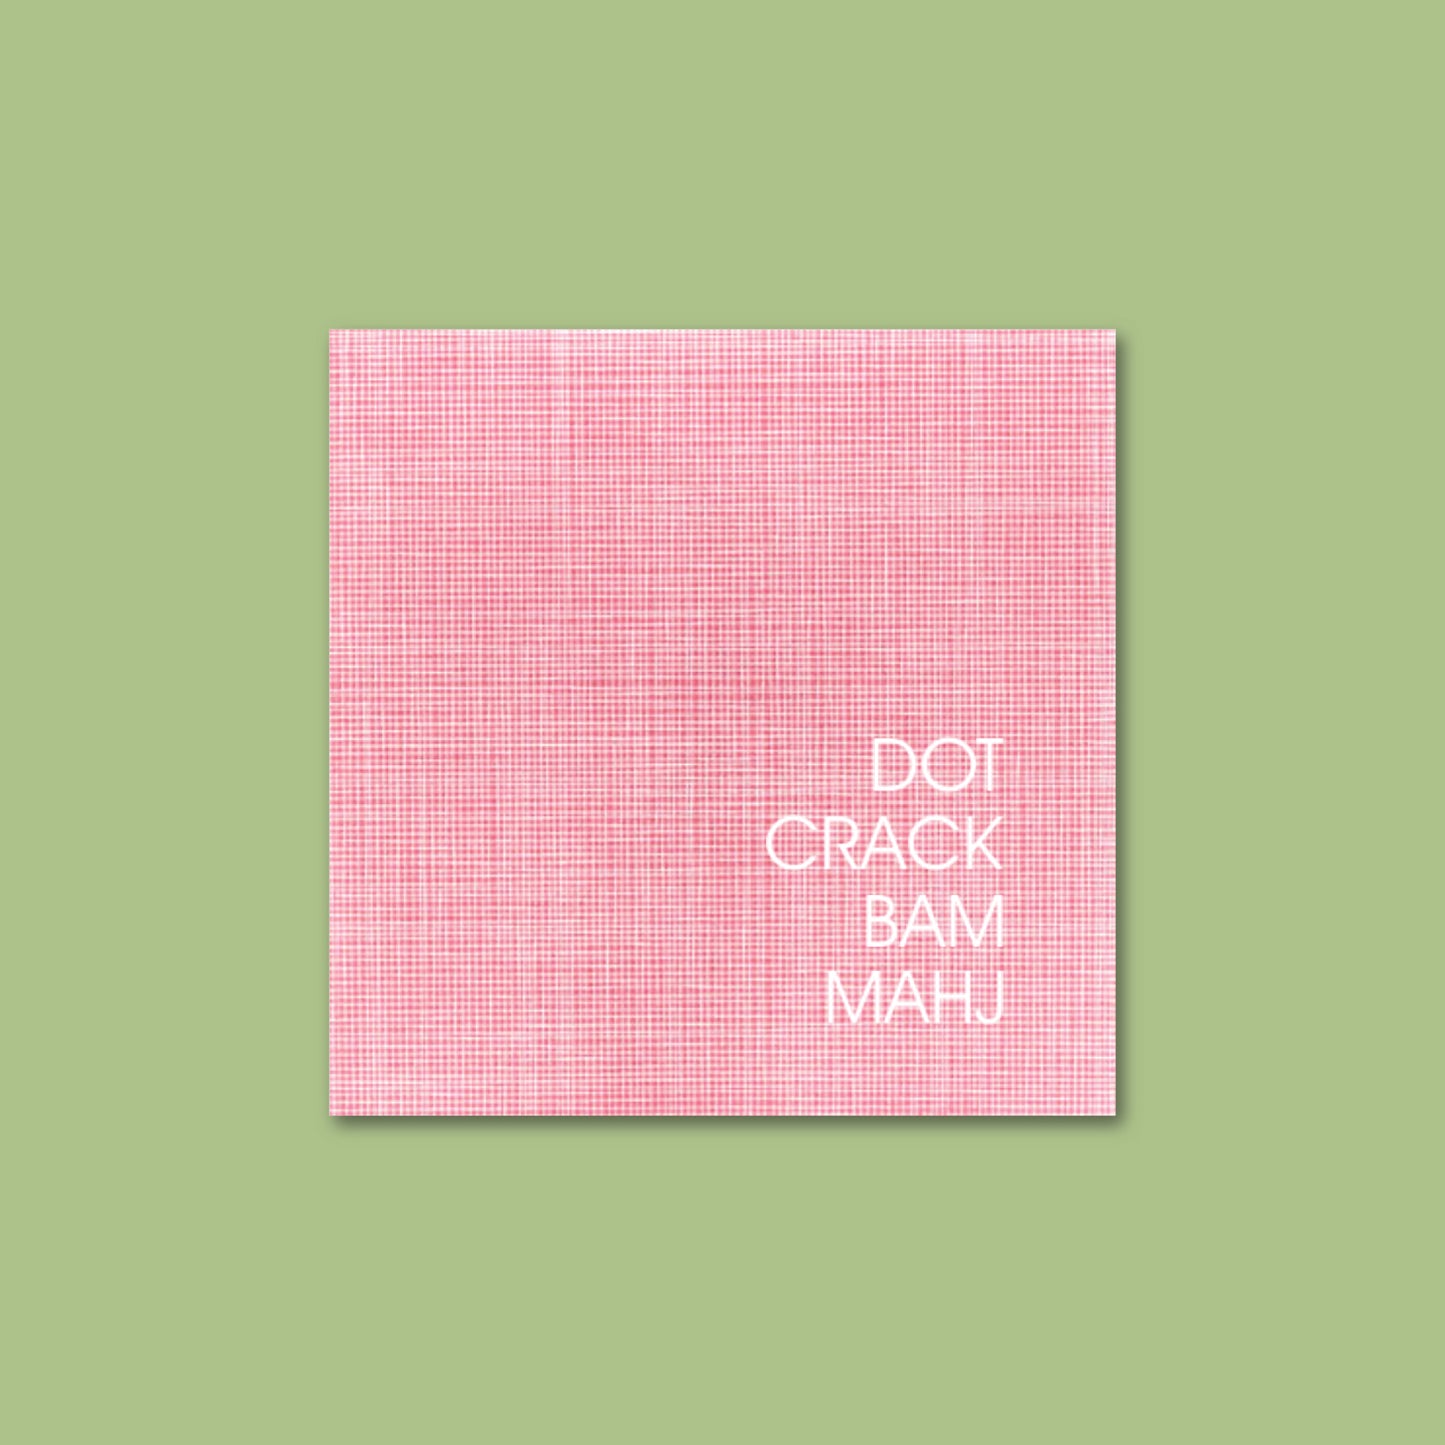 Mah Jongg Napkins   |   Dot, Crack, Bam, Mahj in Pink